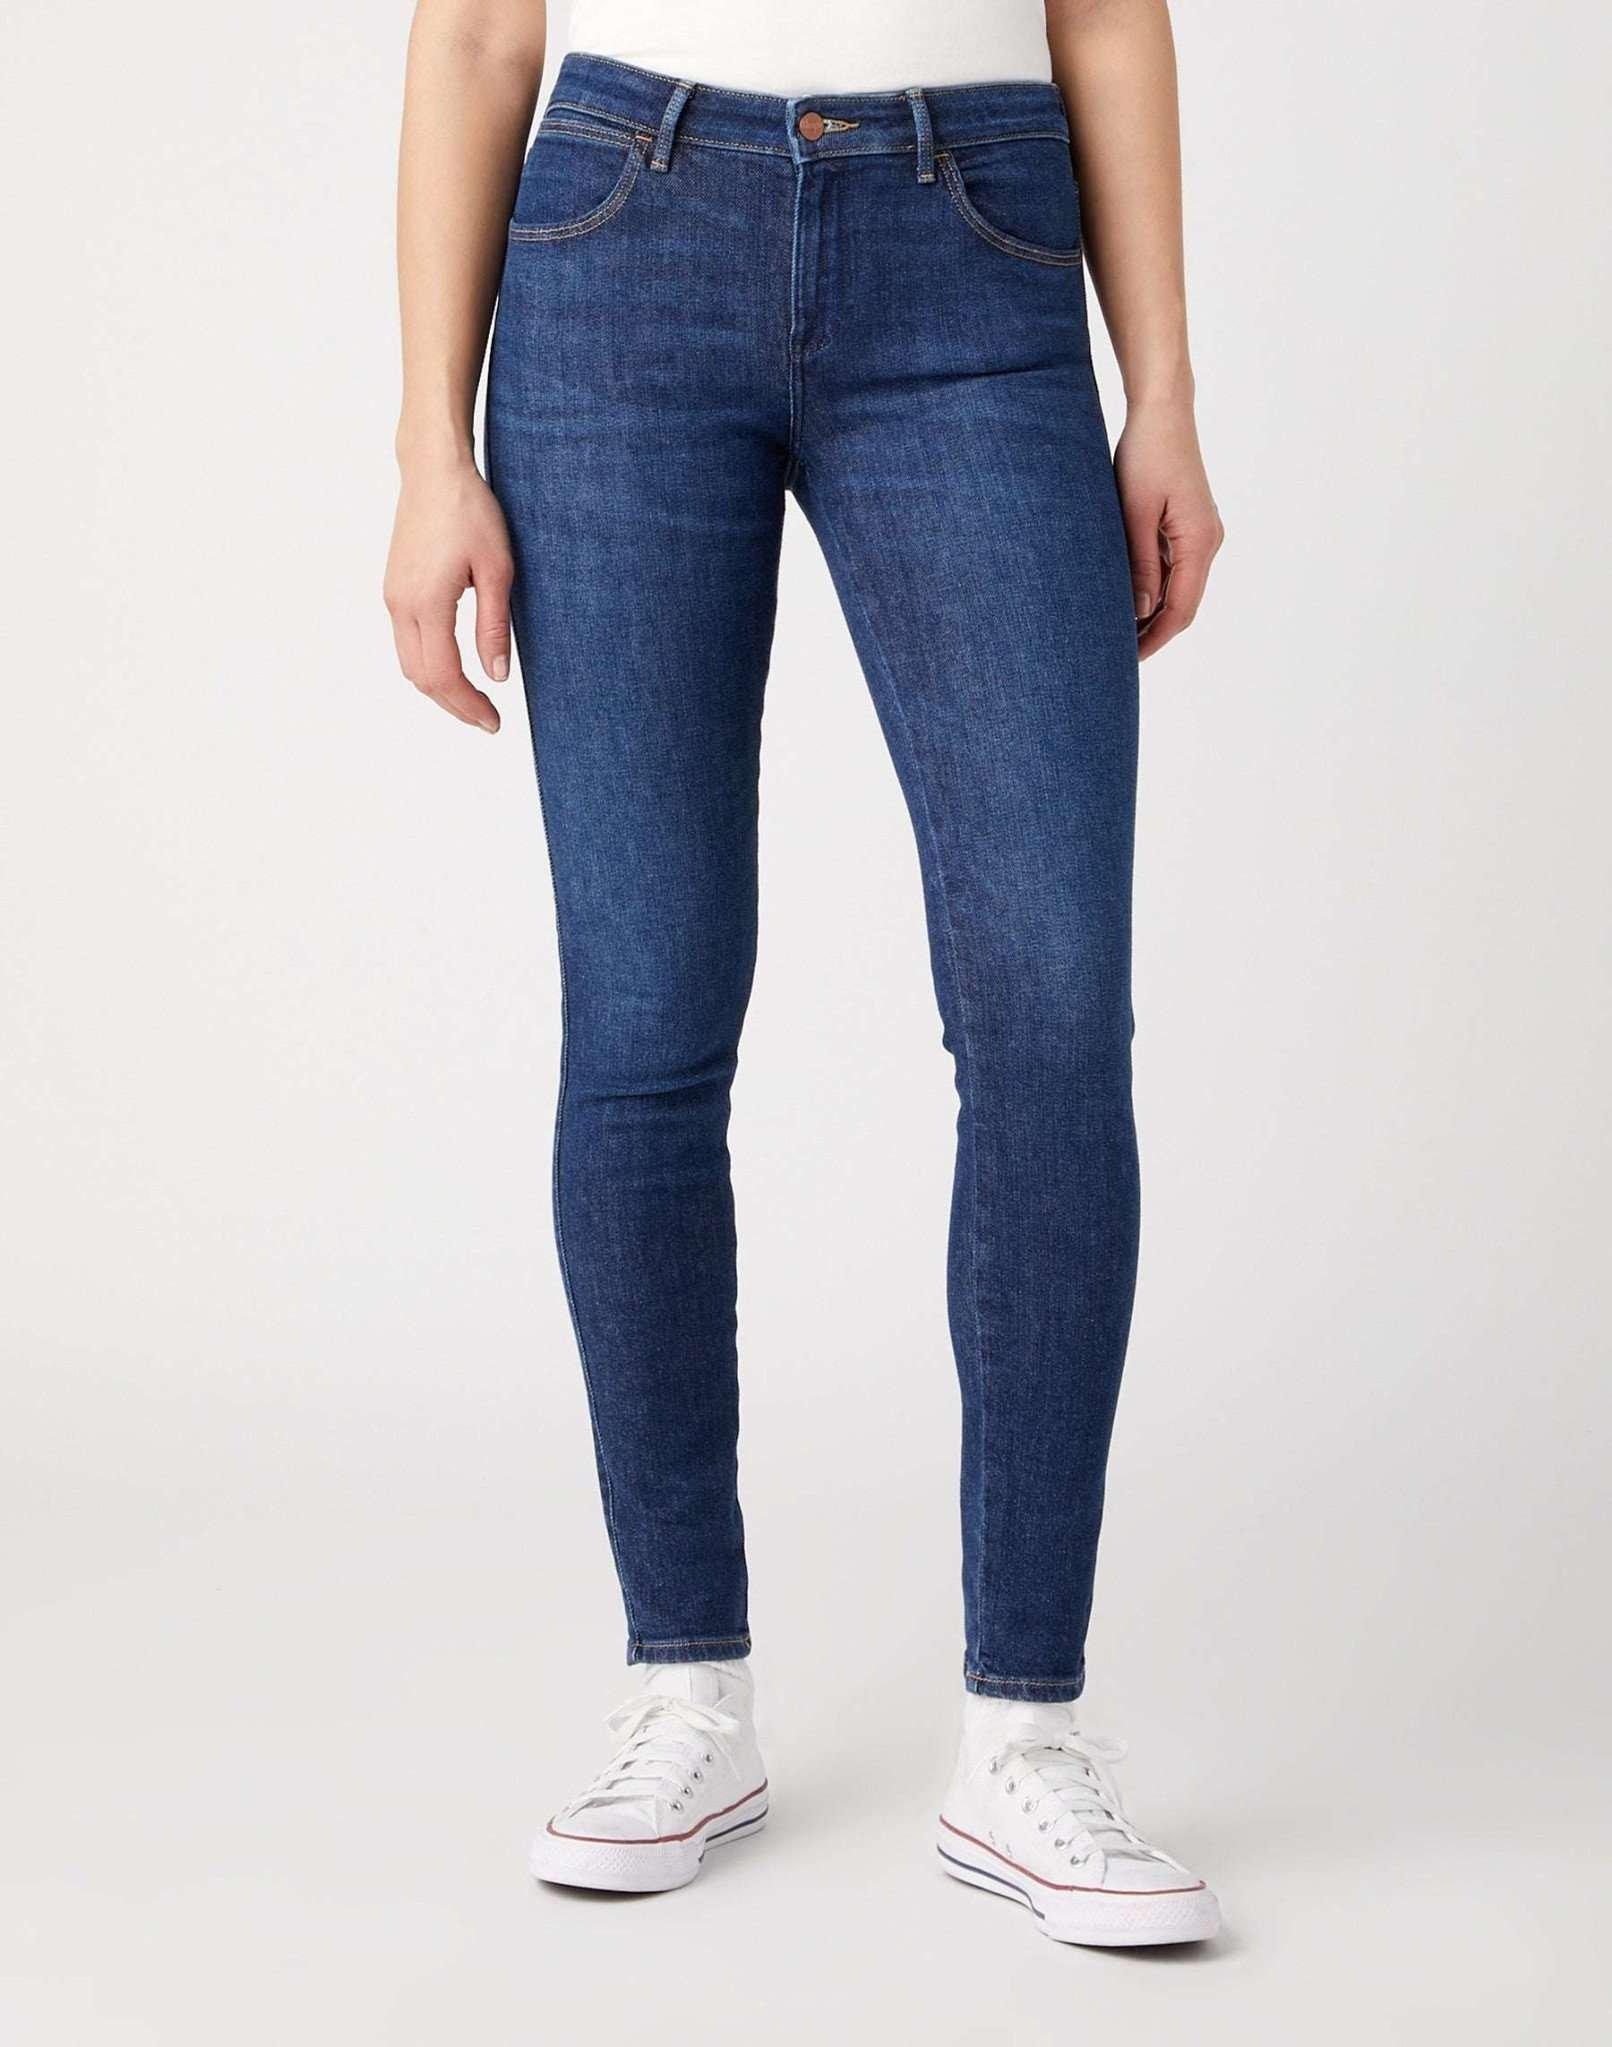 Jeans Skinny Fit Skinny Damen Blau L32/W30 von Wrangler